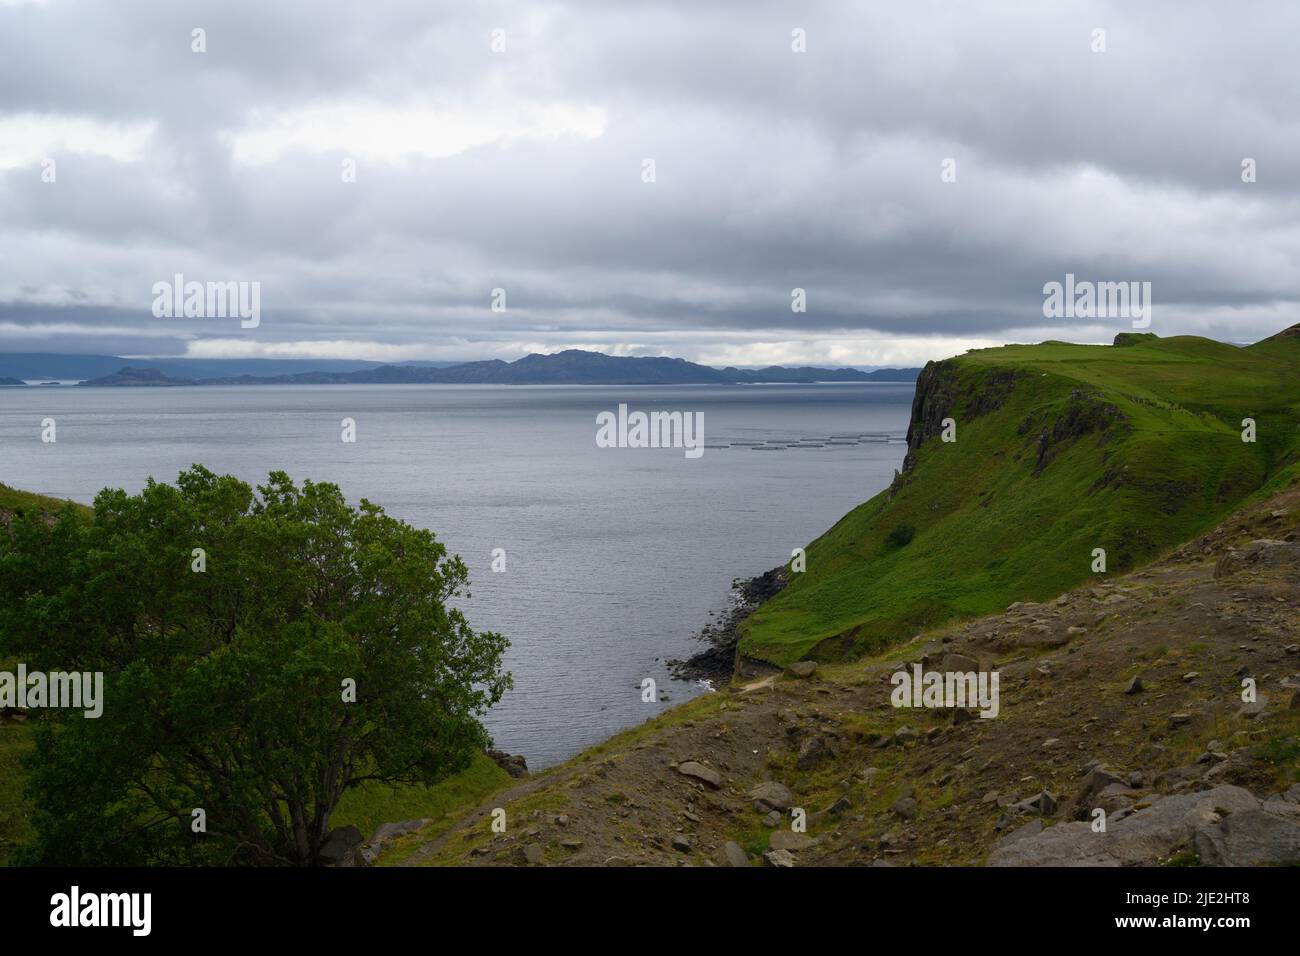 Green Cliffs on a Scottish Coastline Stock Photo